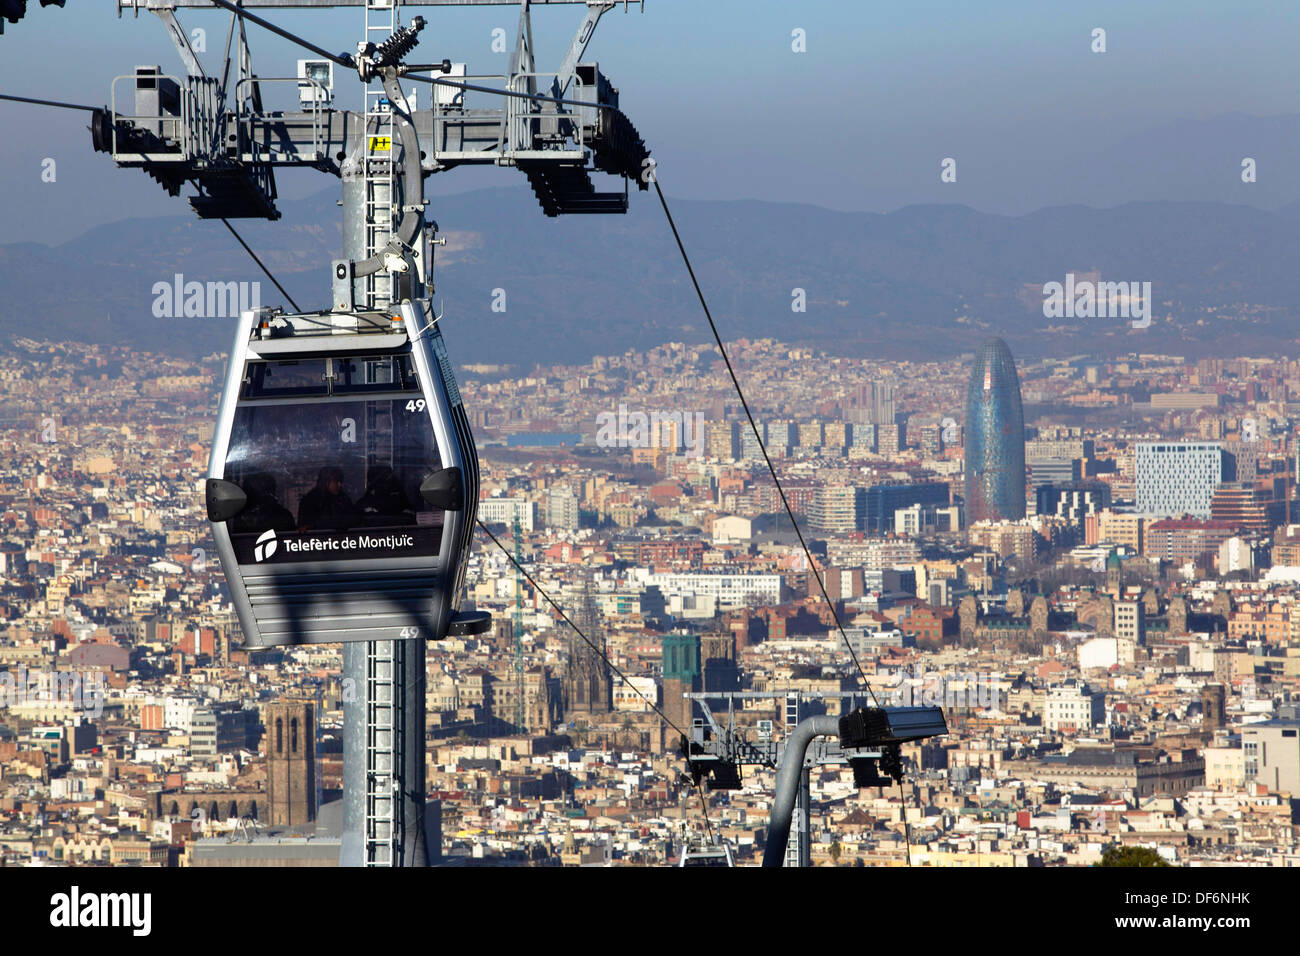 Teleferic de Montjuic gondola lift, Barcelona, Catalonia, Spain Stock Photo  - Alamy